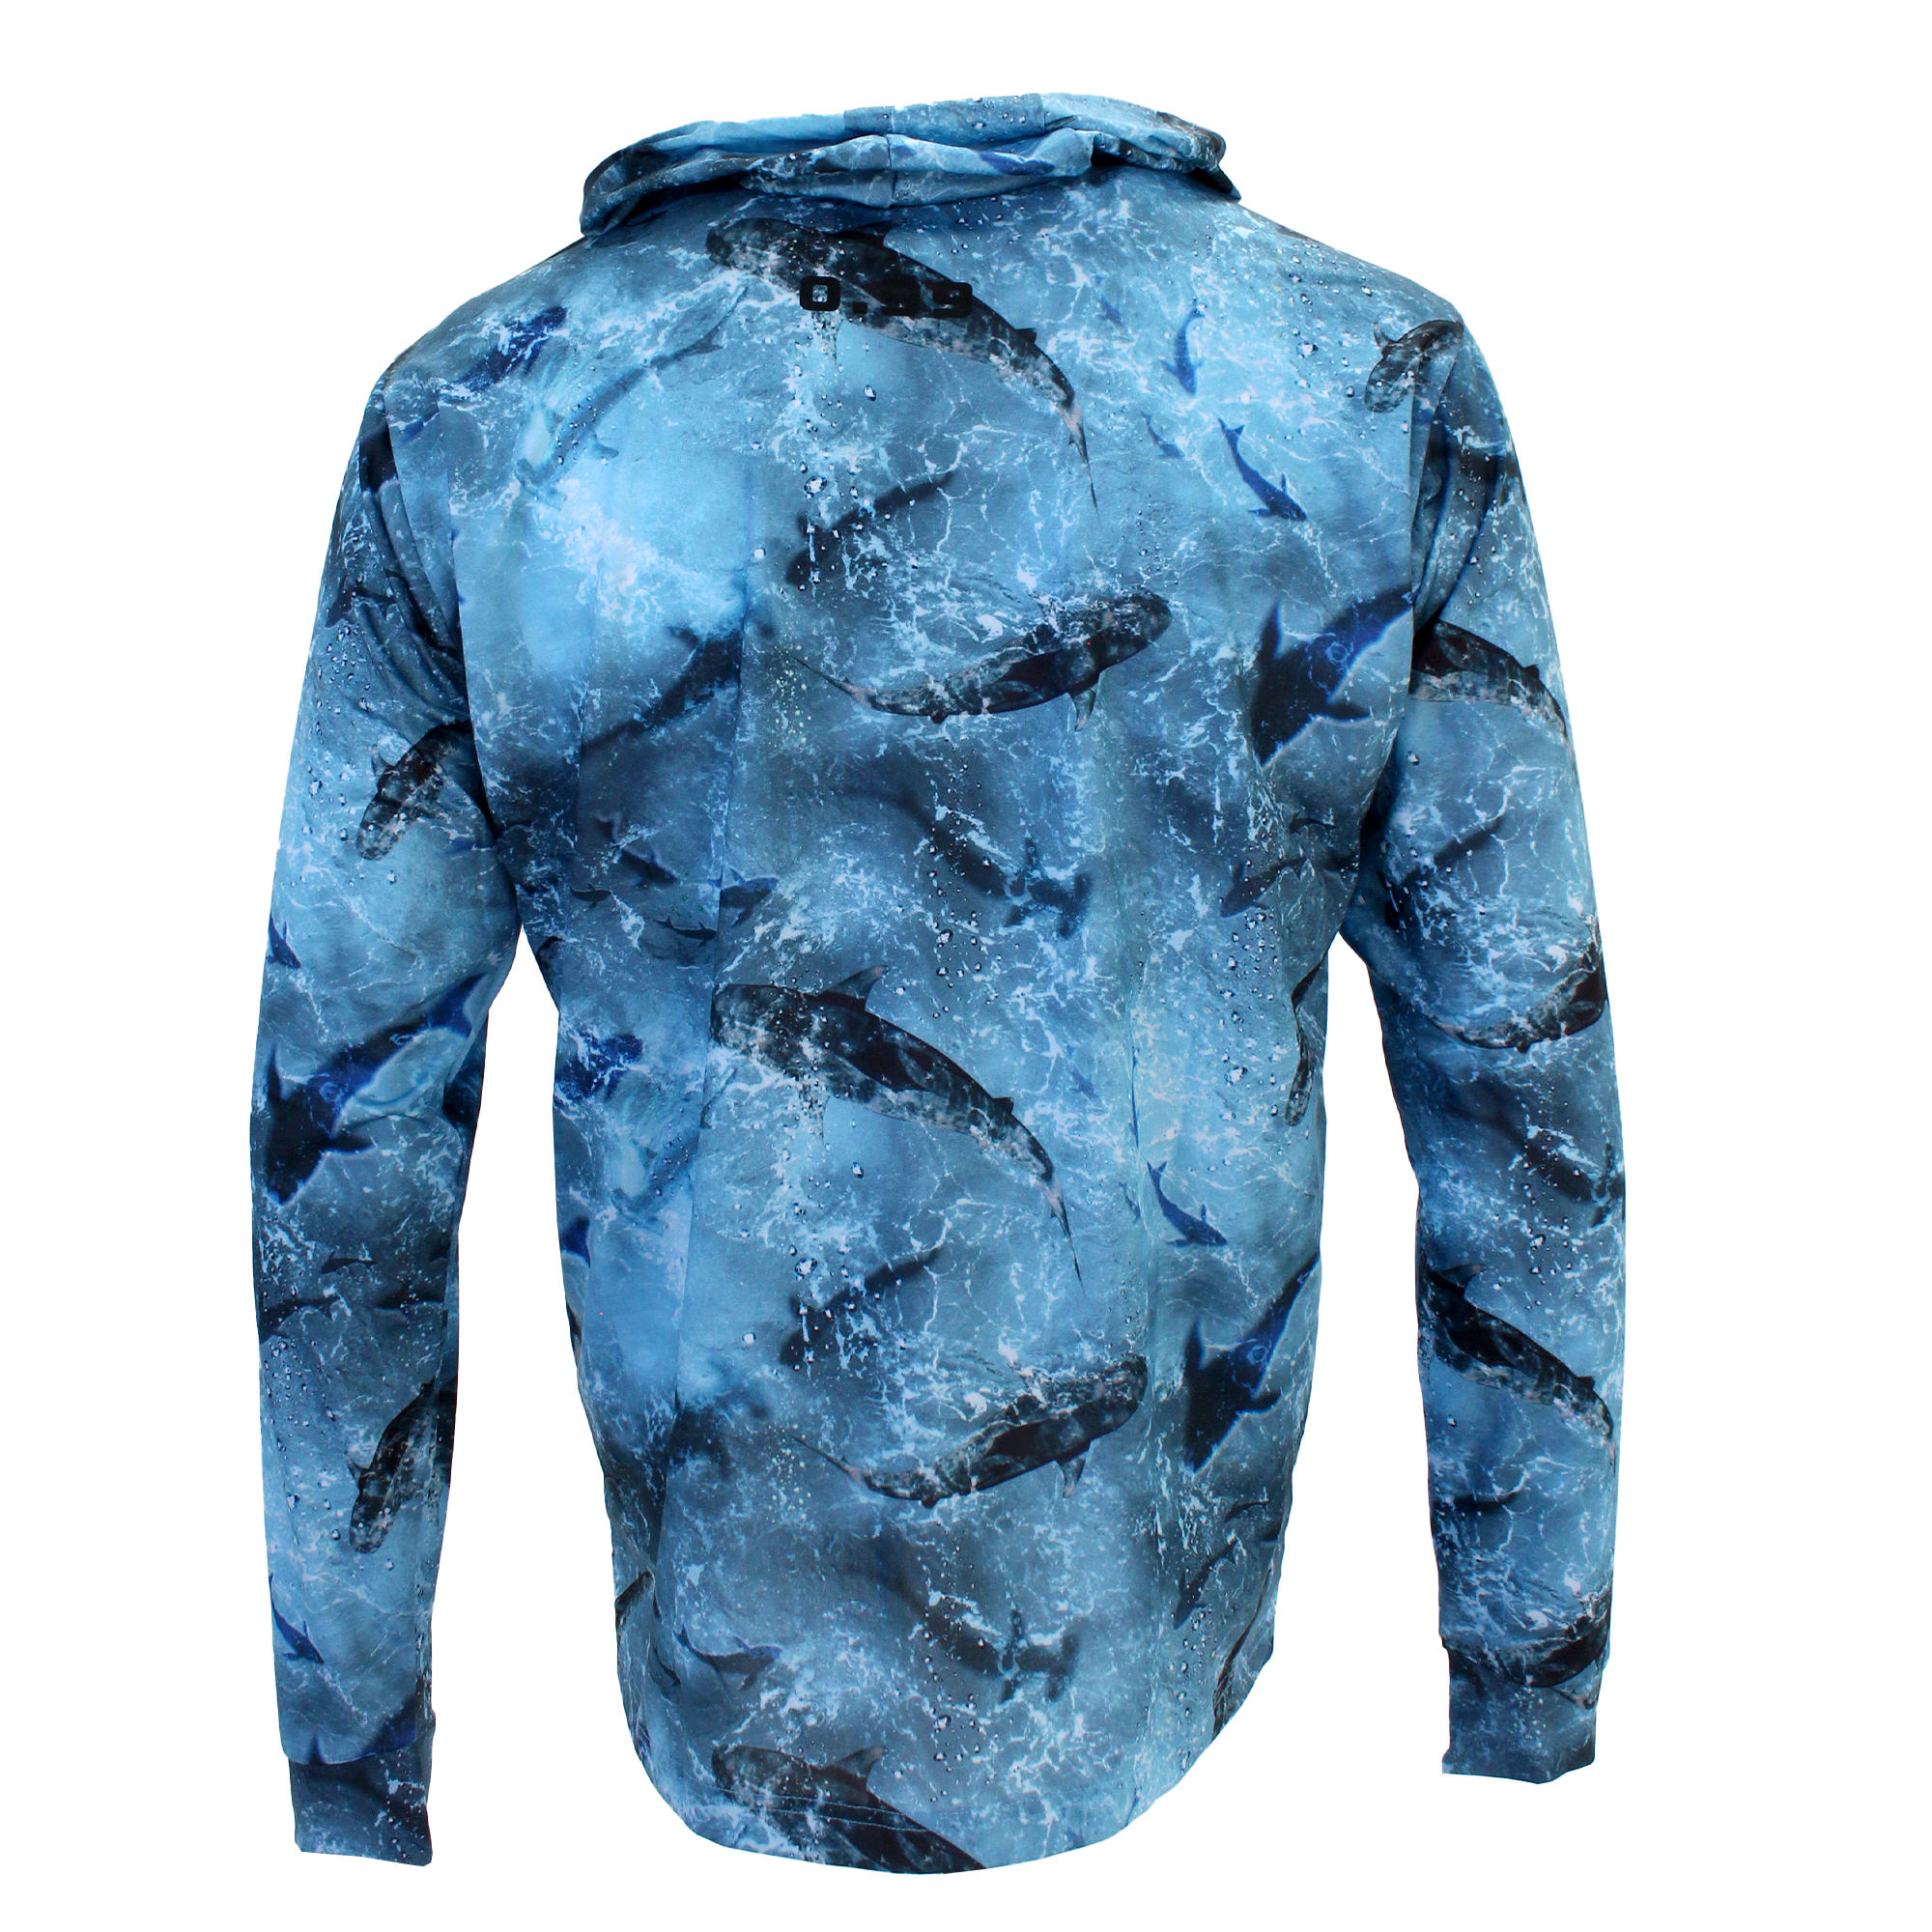 .99 Hooded Performance Long Sleeve Shirt - Shark - Blue